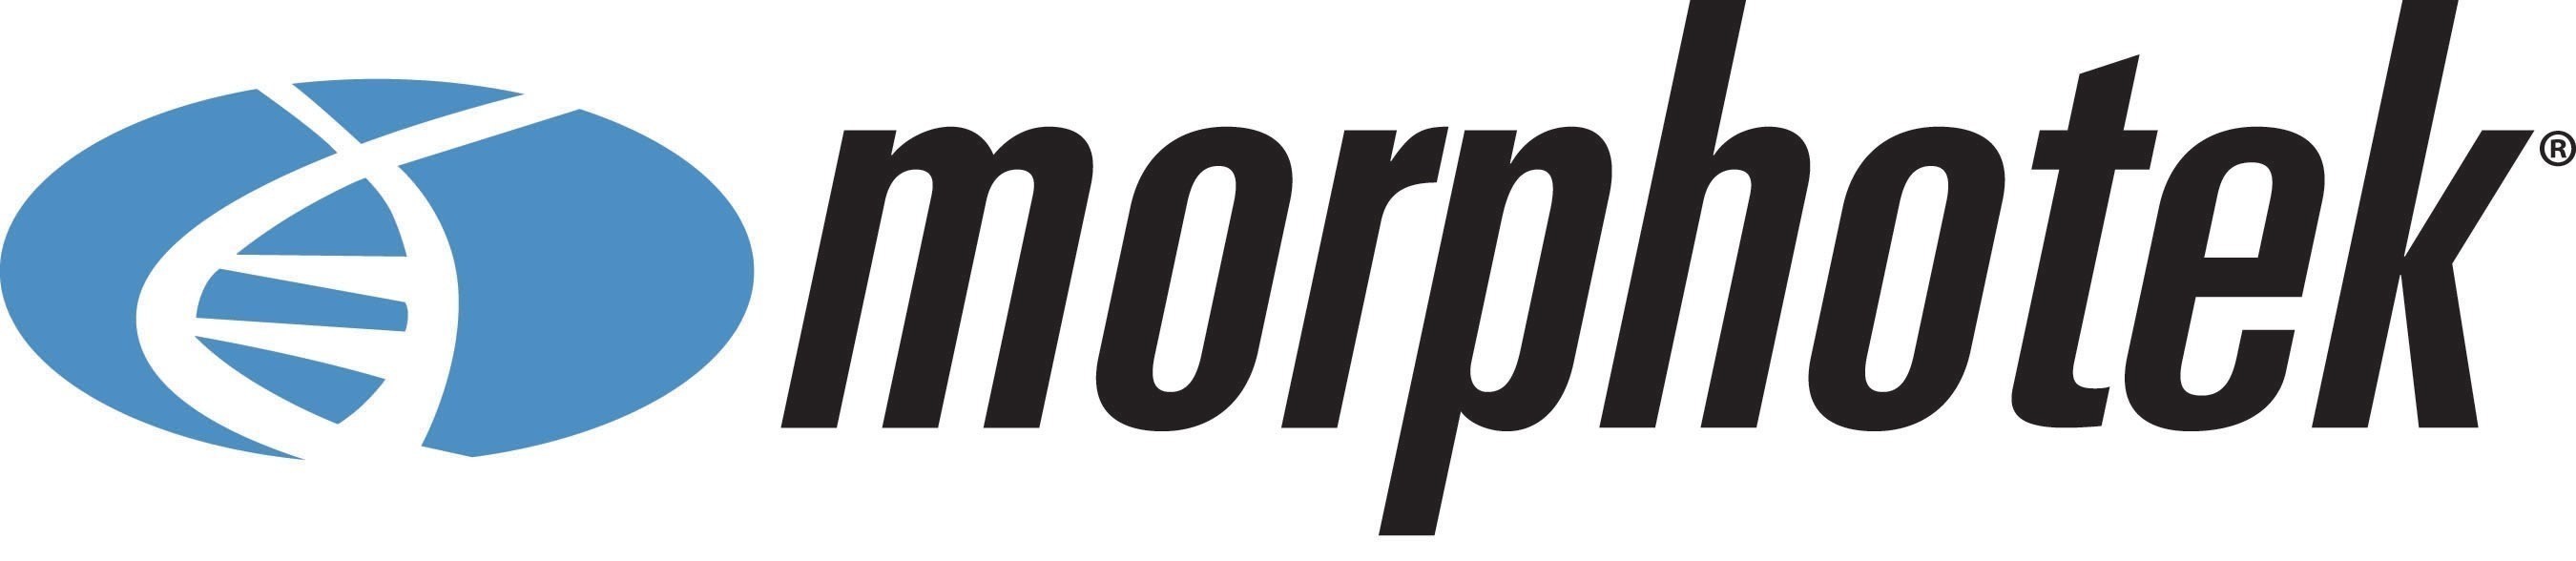 Morphotek Inc. Logo